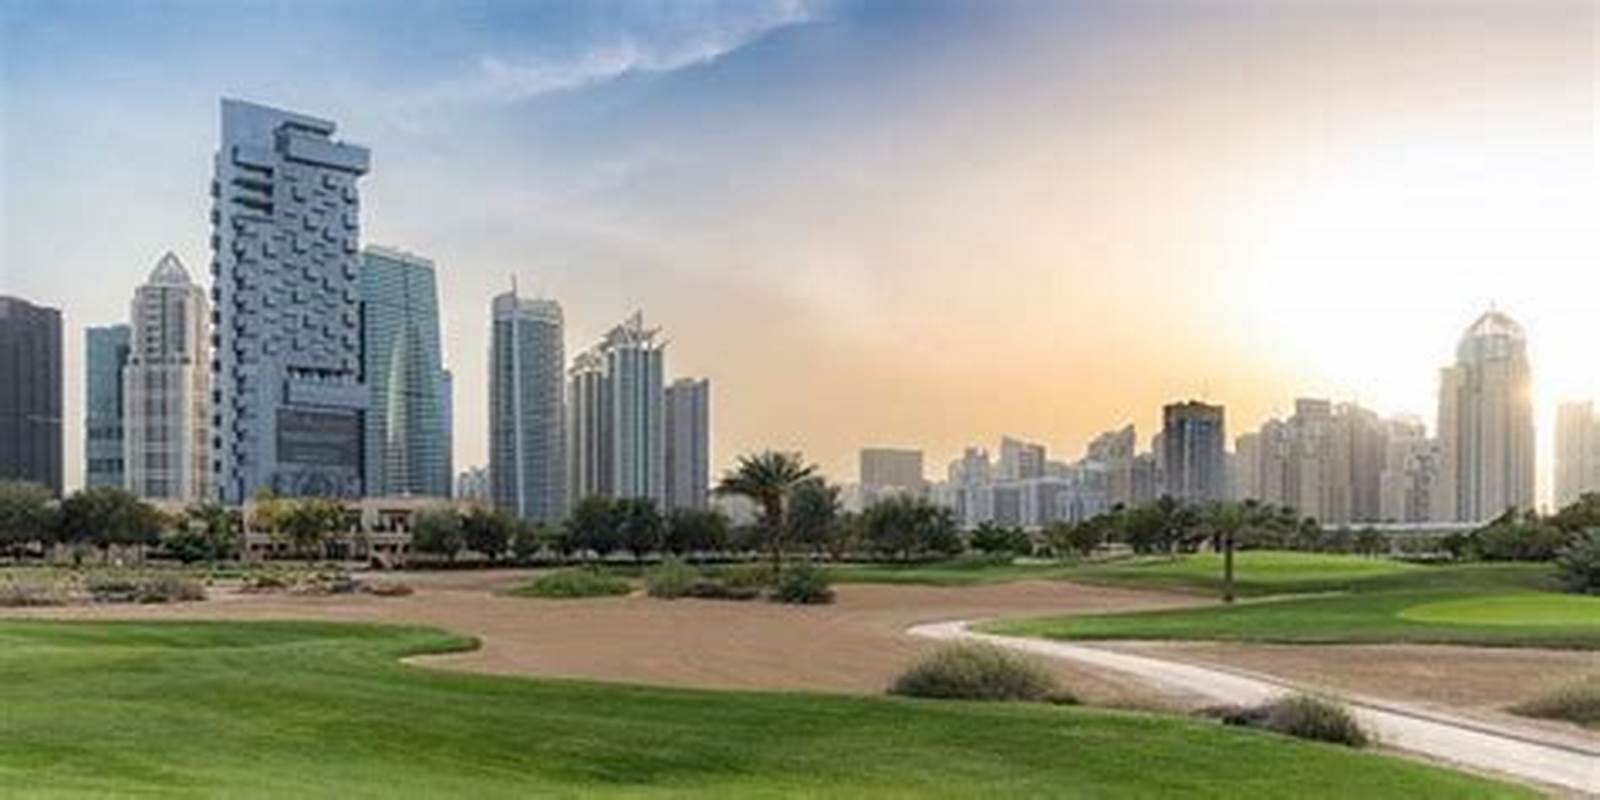 Residential Plots for Sale in Dubai - Buy Plots | Land for sale in Dubai